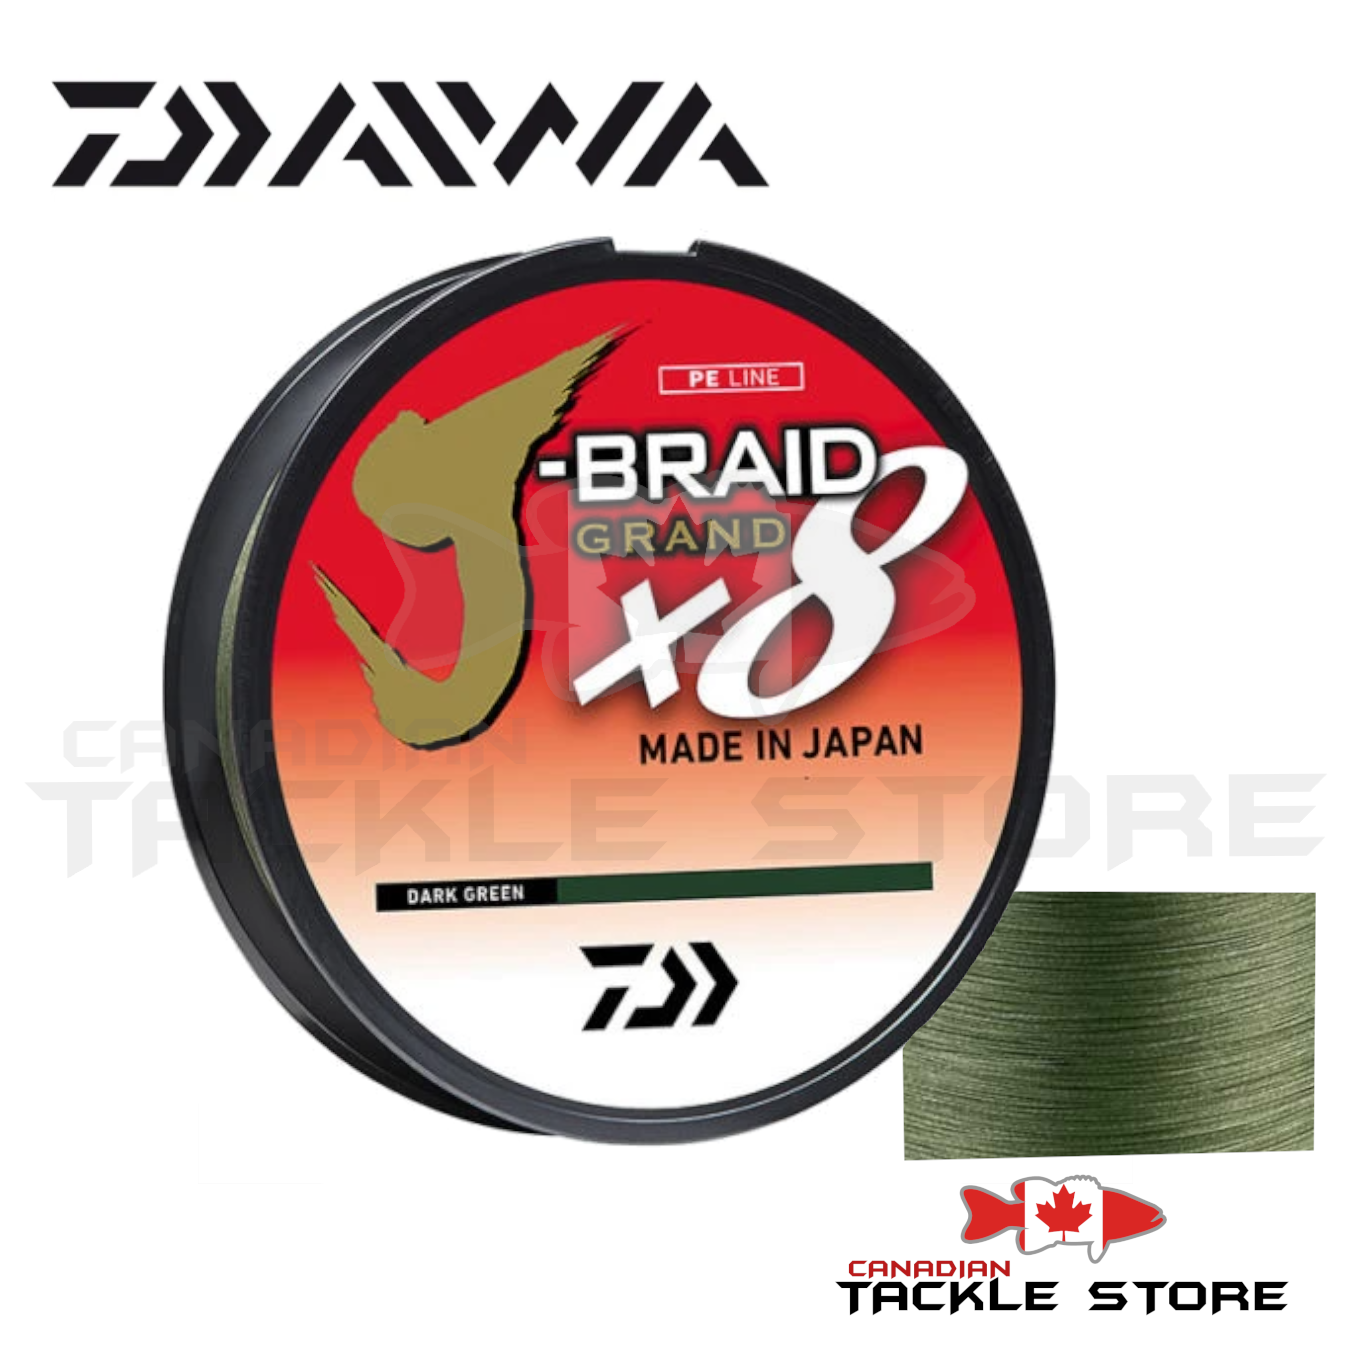  J-Braid X8 Grand Braided Line, 150 Yards, 20 Lb